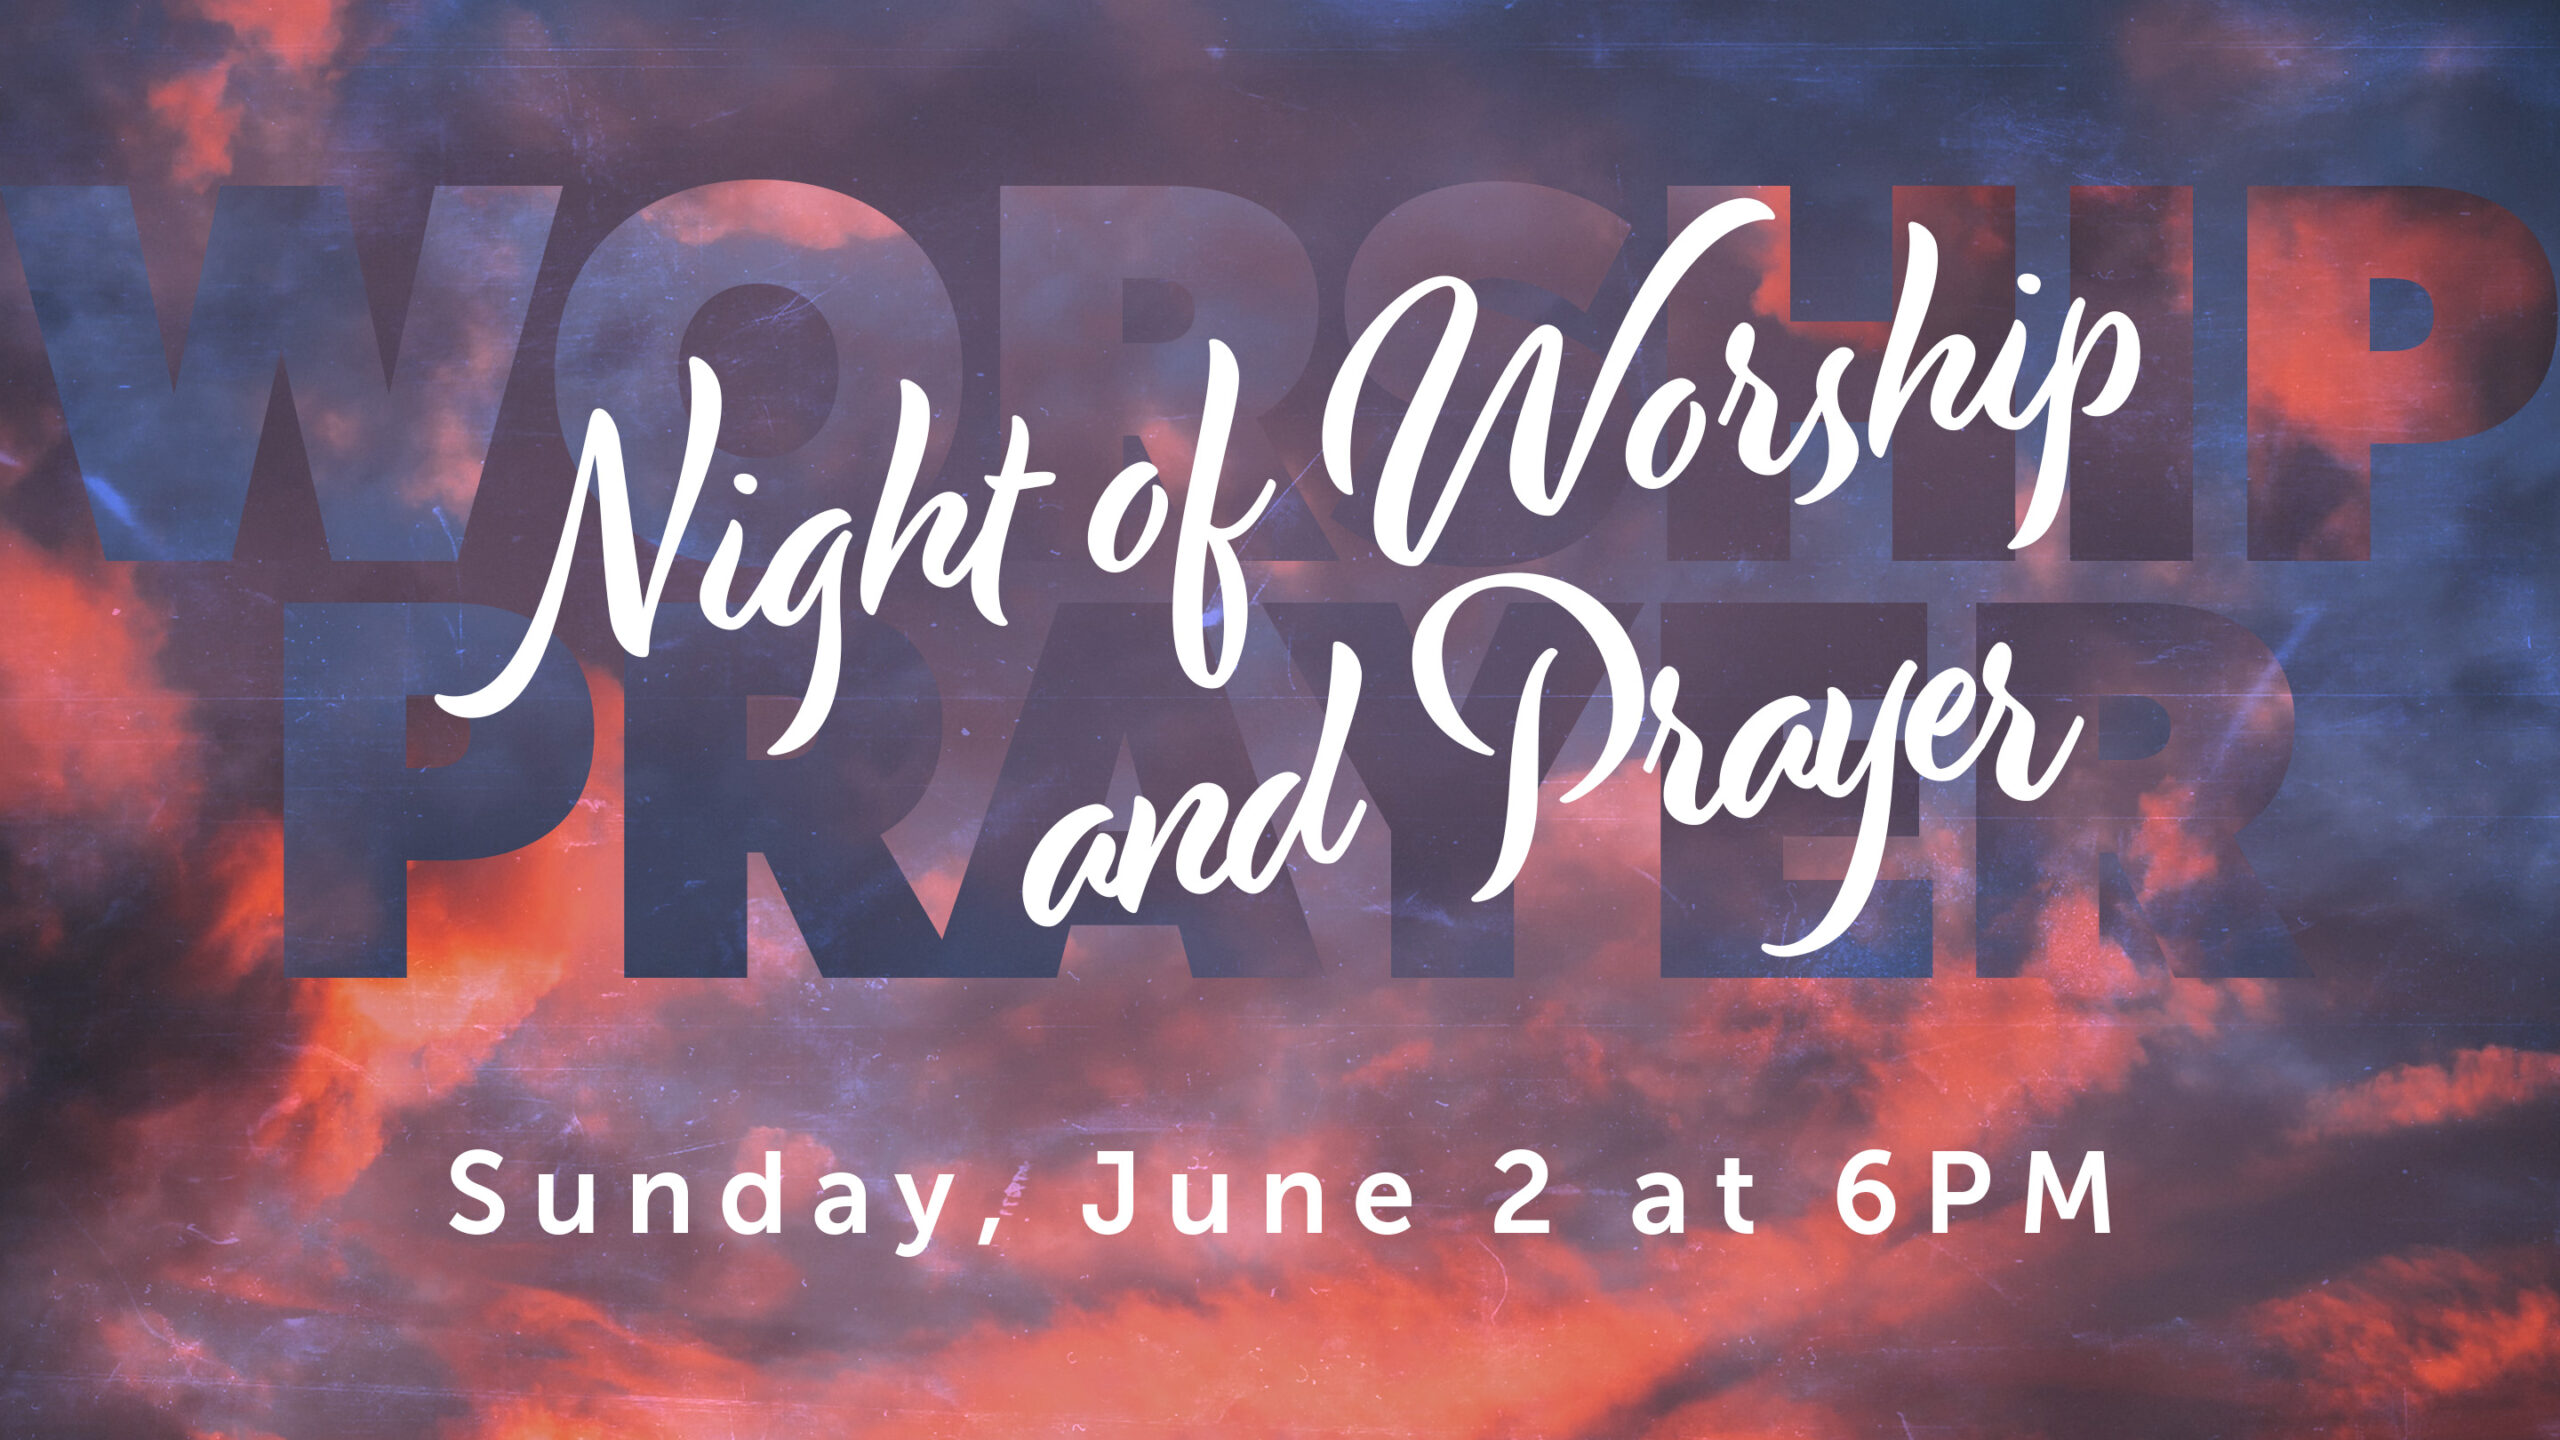 Night of Worship & Prayer